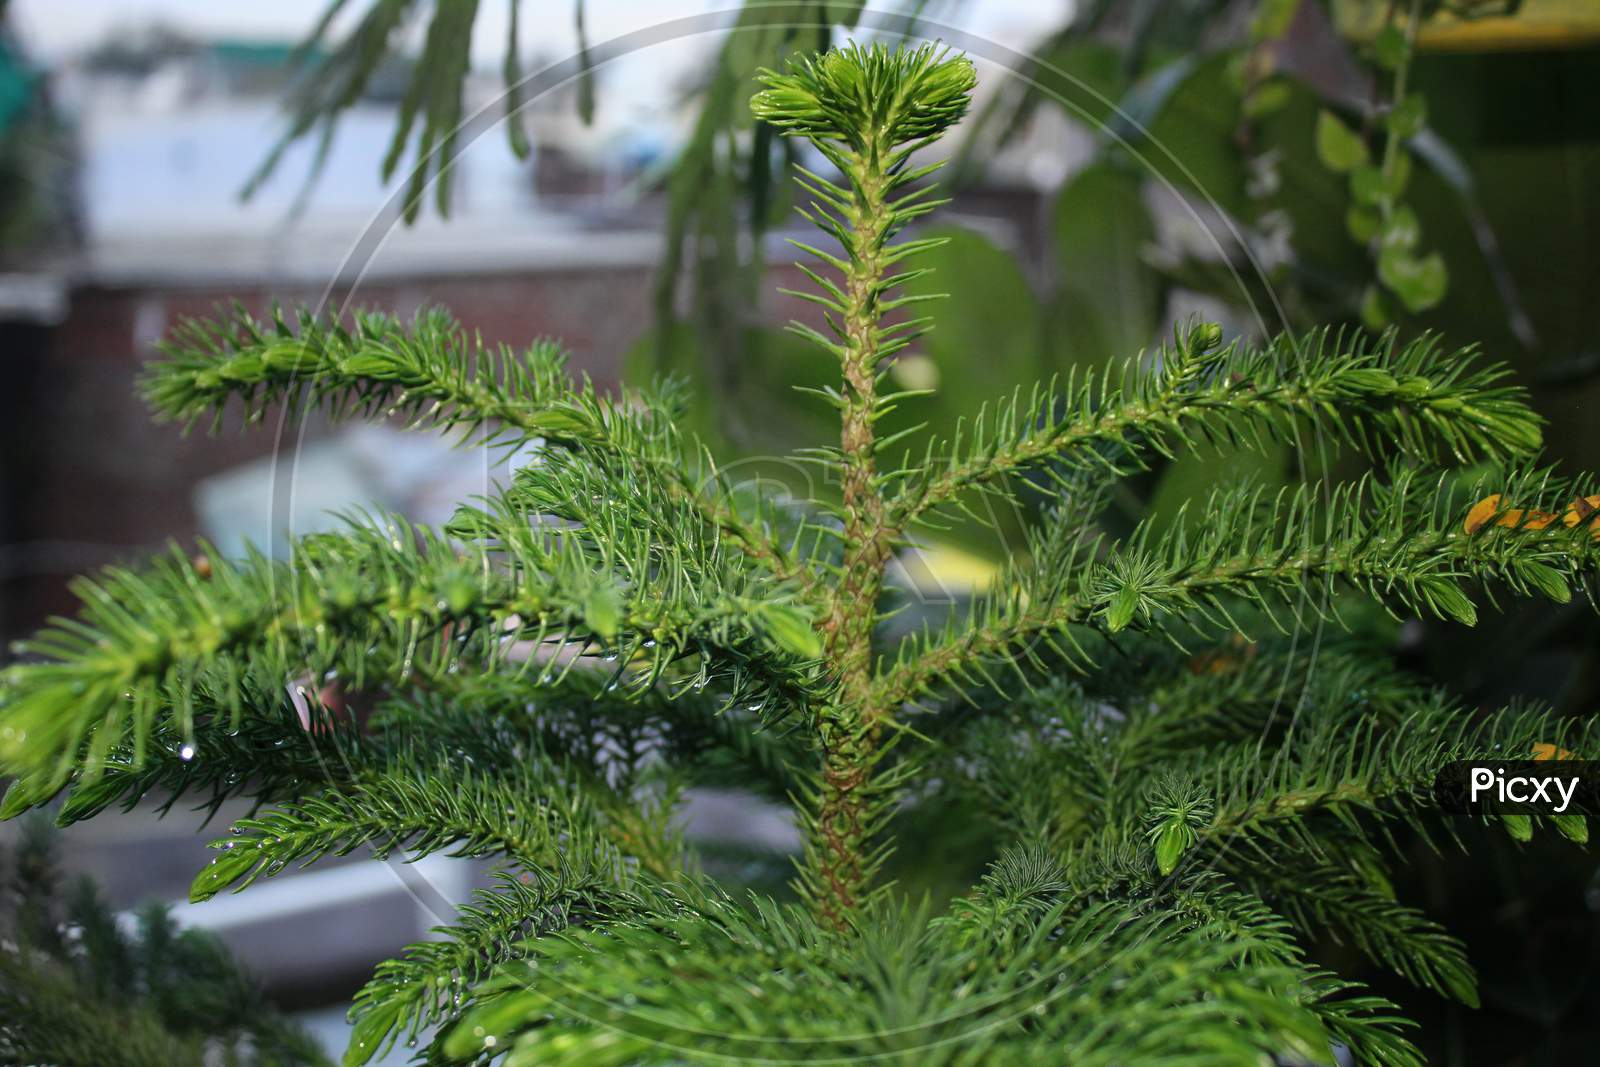 Christmas Tree, Araucaria Heterophylla, Norfolk Island Pine, Implies Natural Growing In An Organic Home Garden.